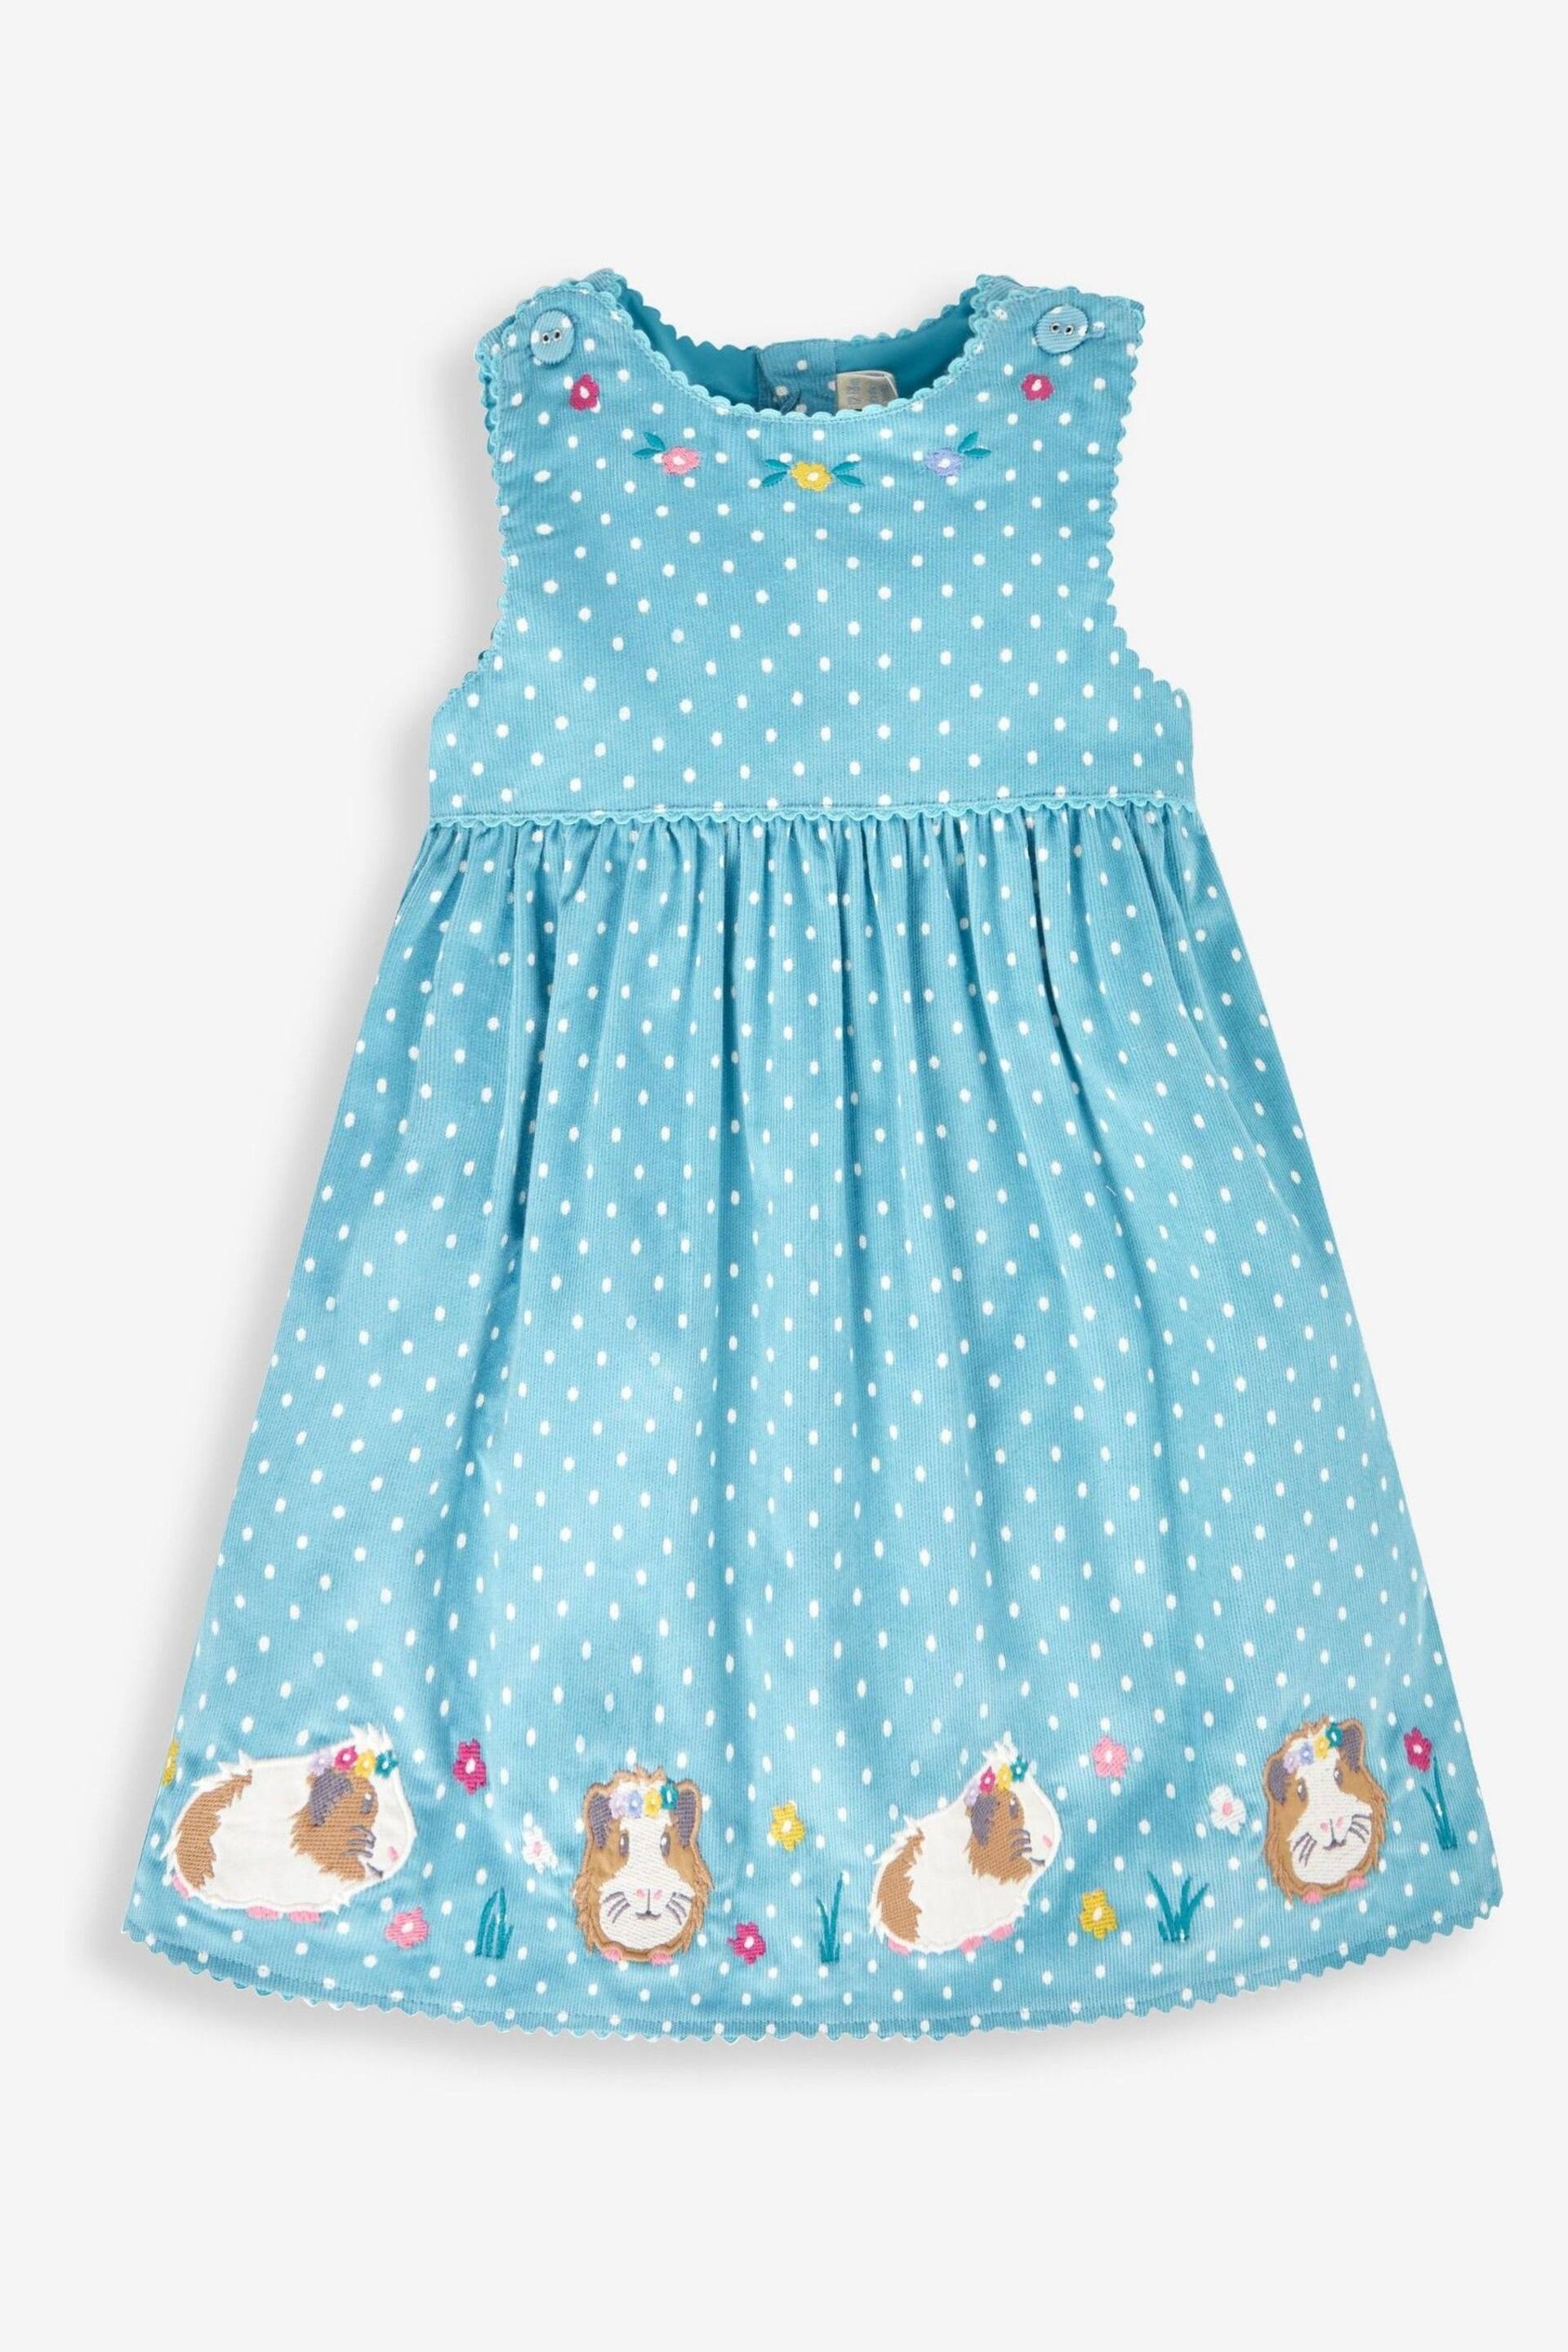 JoJo Maman Bébé Duck Egg Blue Guinea Pig Girls' Appliqué Cord Dress - Image 3 of 5